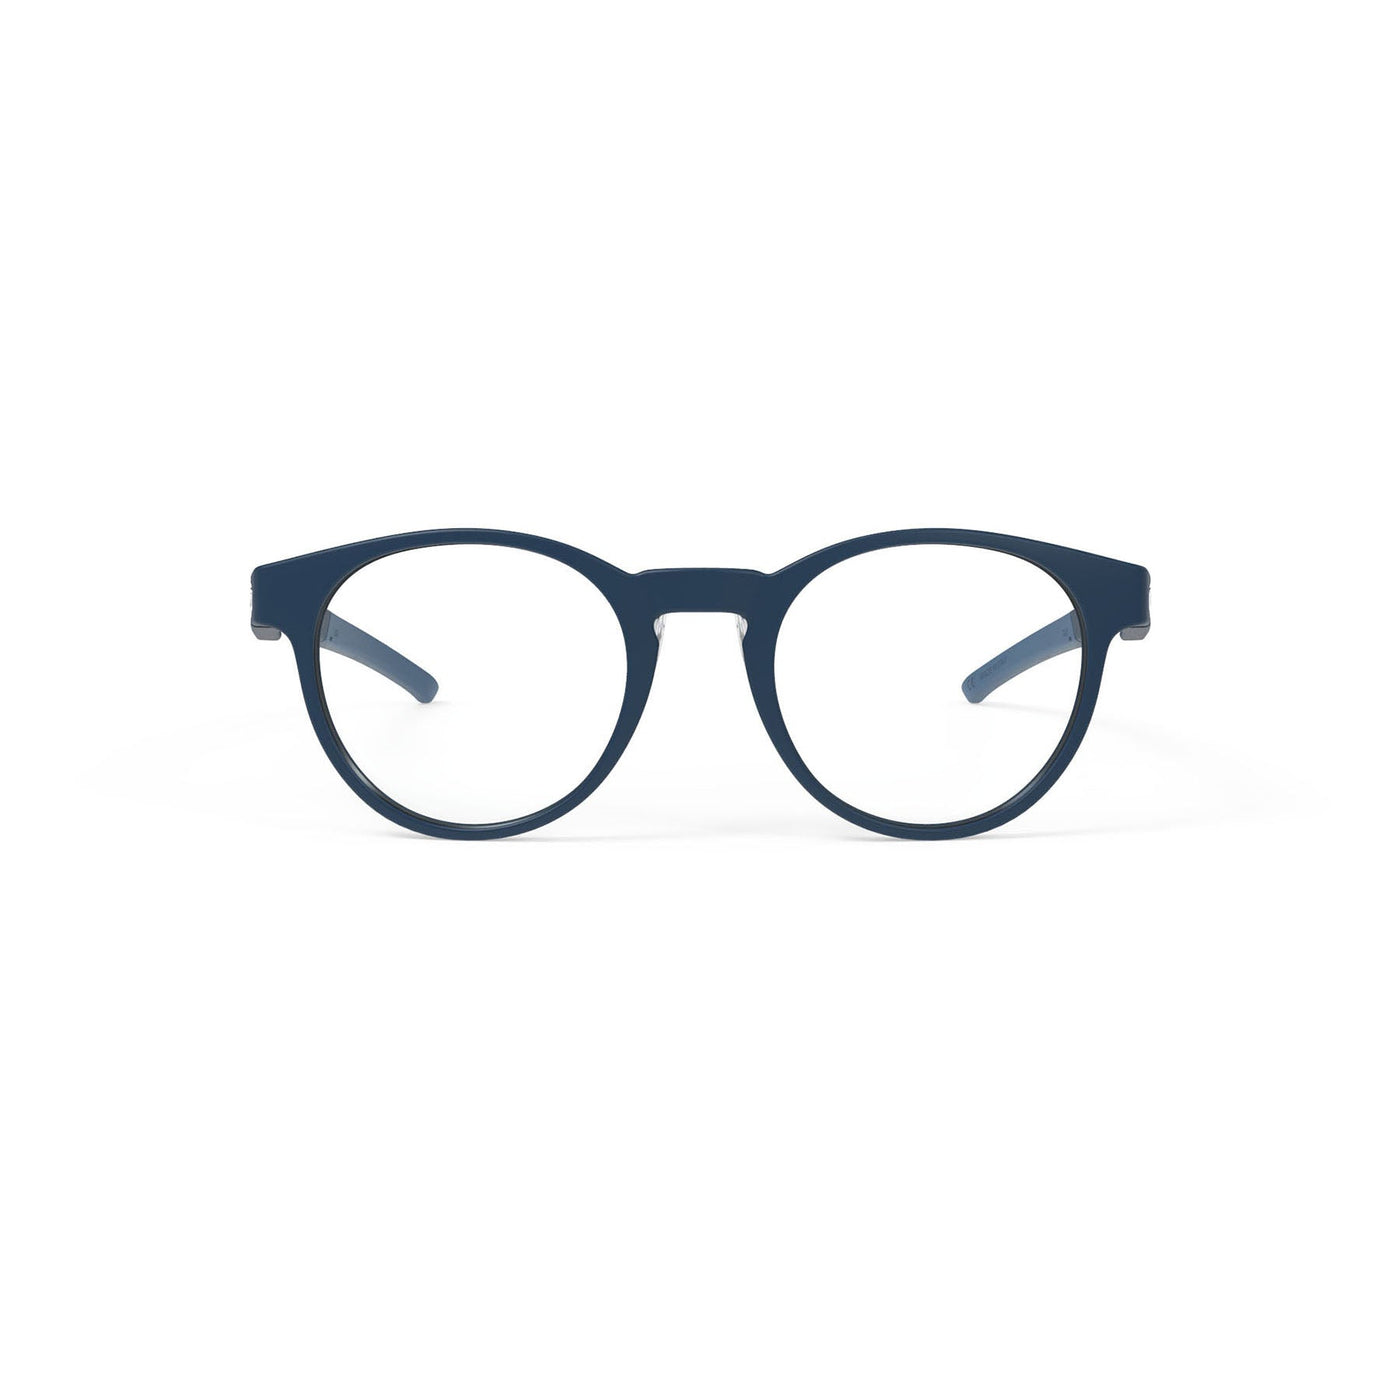 Rudy Project Step 02 light weight prescription eyeglass frames#color_step-02-ophthalmic-navy-blue-matte